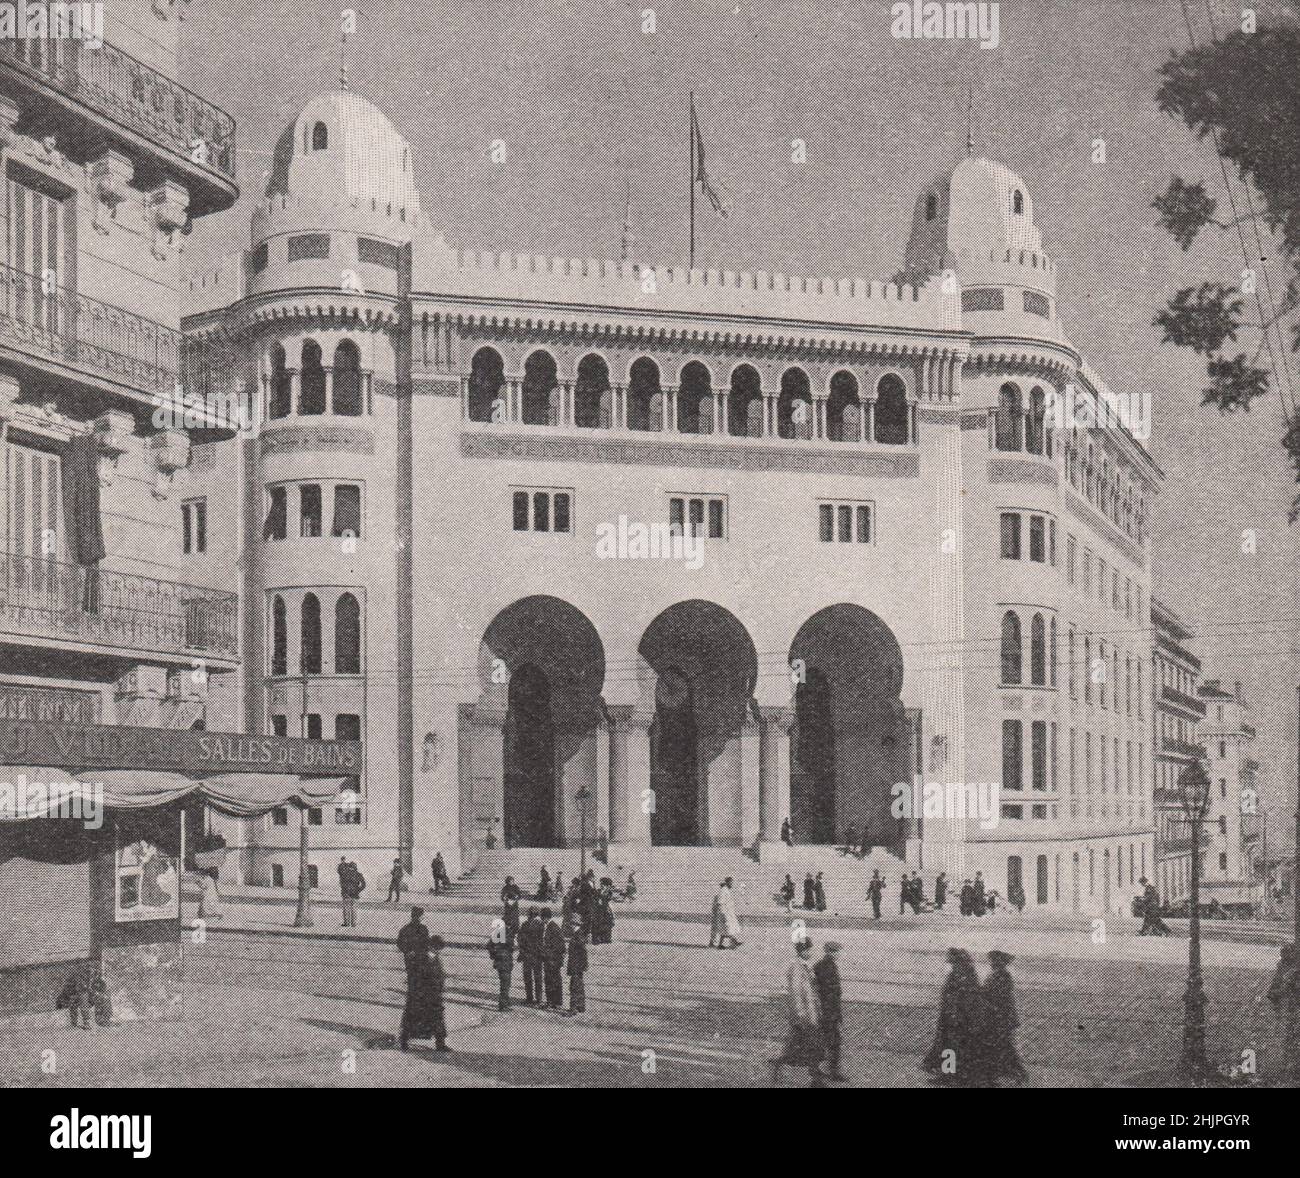 Kontrastierende Architekturstile in der Stadt Algier. Algerien. Barbary States (1923) Stockfoto